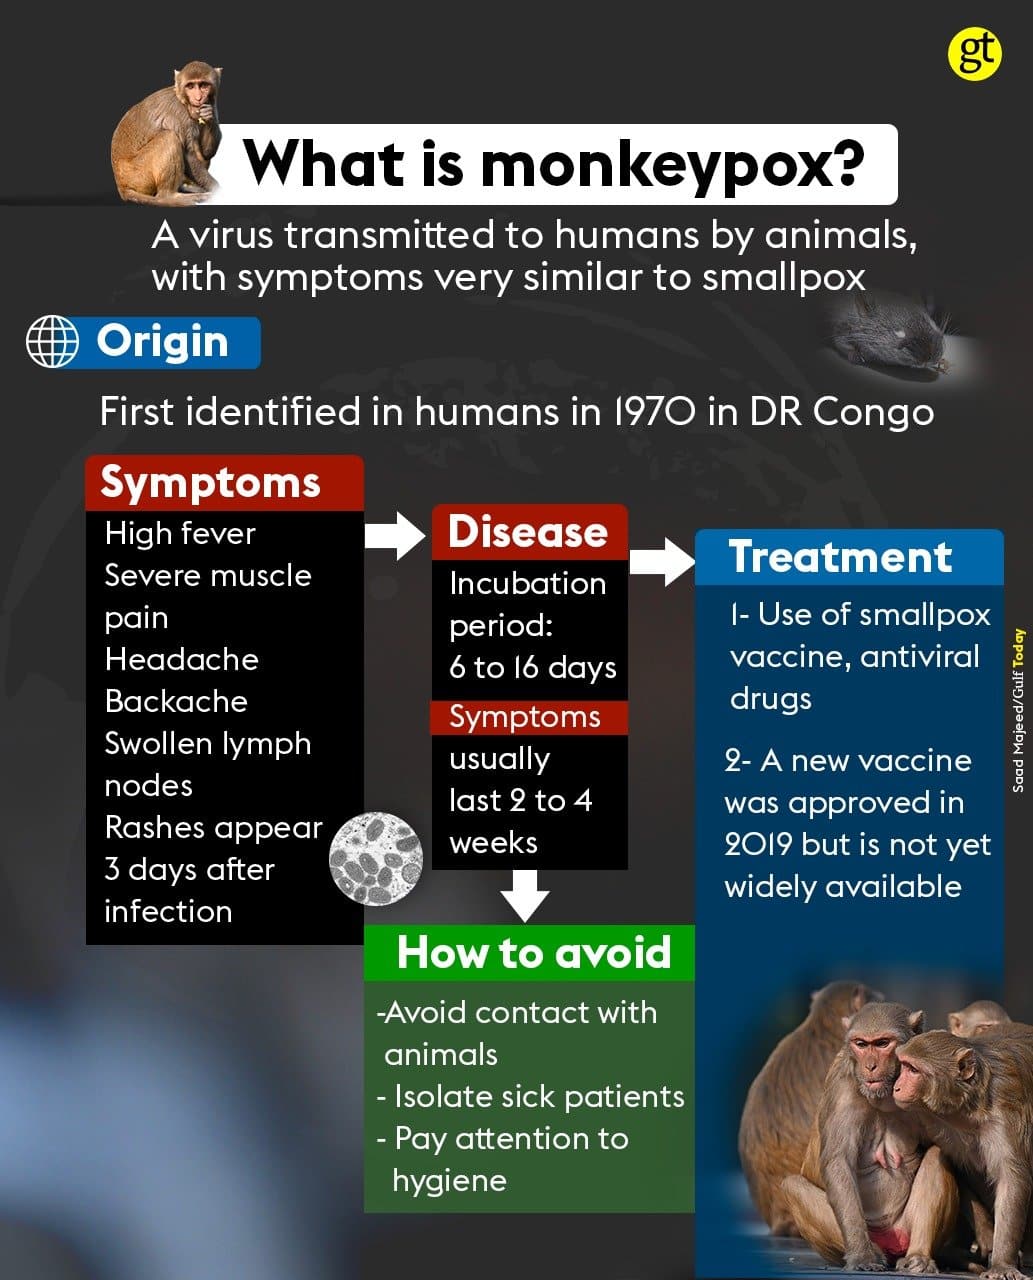 Monkeypox declared a global health emergency by WHO